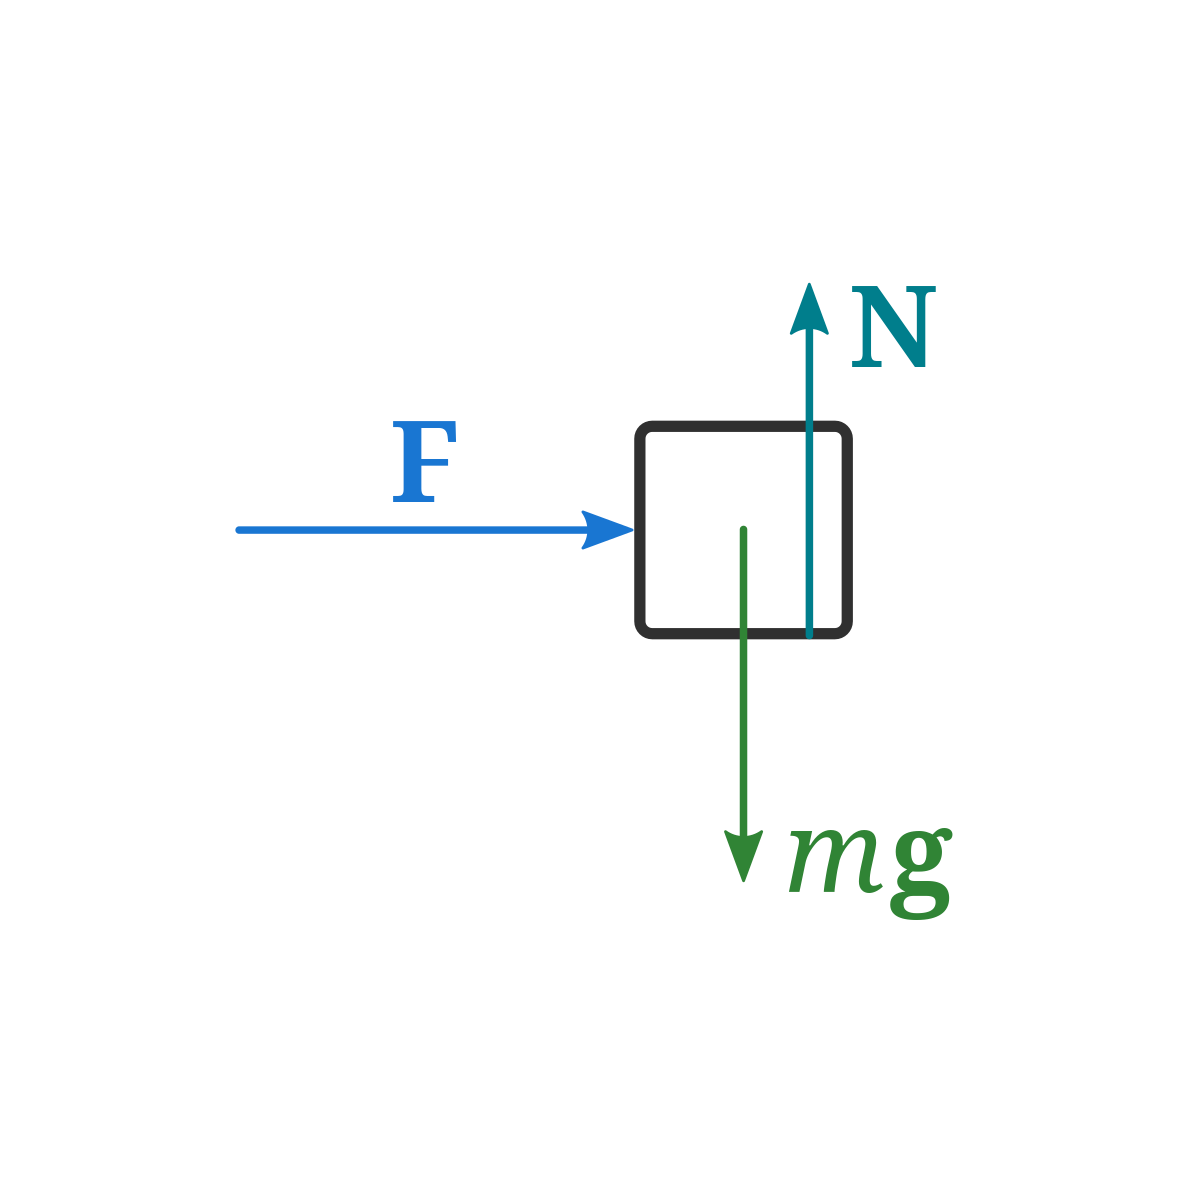 i) Draw a labelled circuit diagram to study a relationship b/w potent-saigonsouth.com.vn